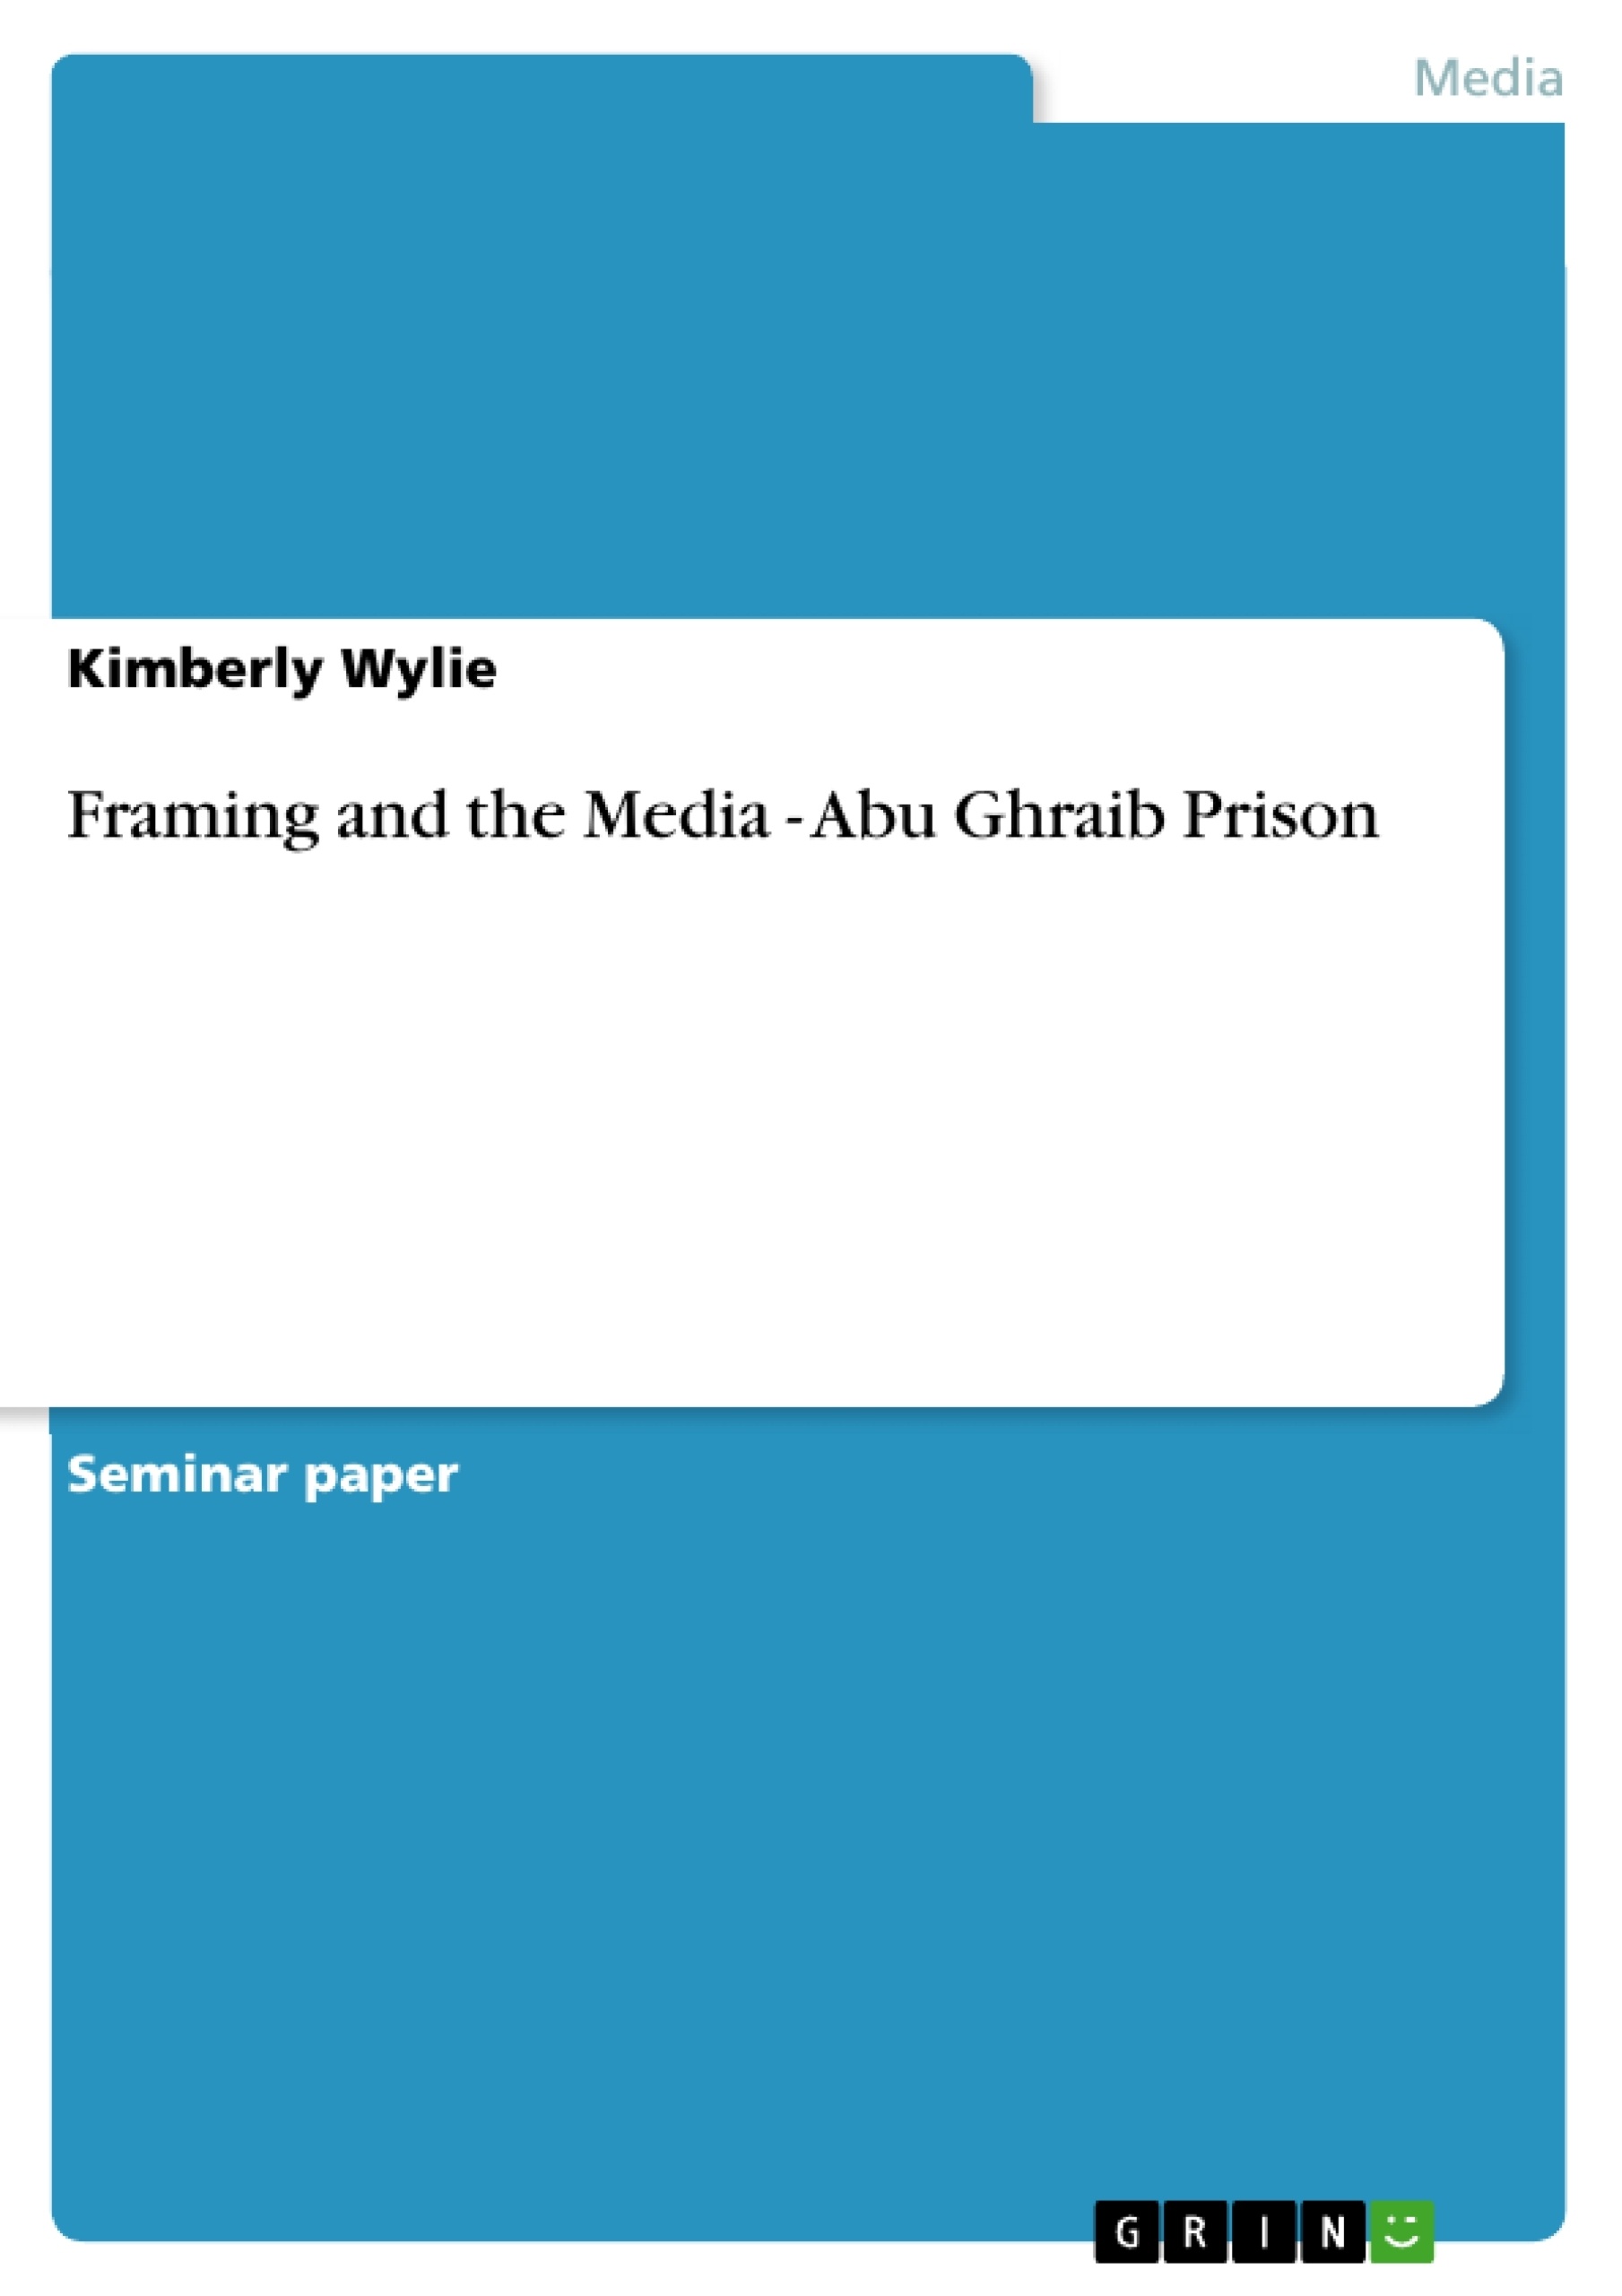 Title: Framing and the Media - Abu Ghraib Prison